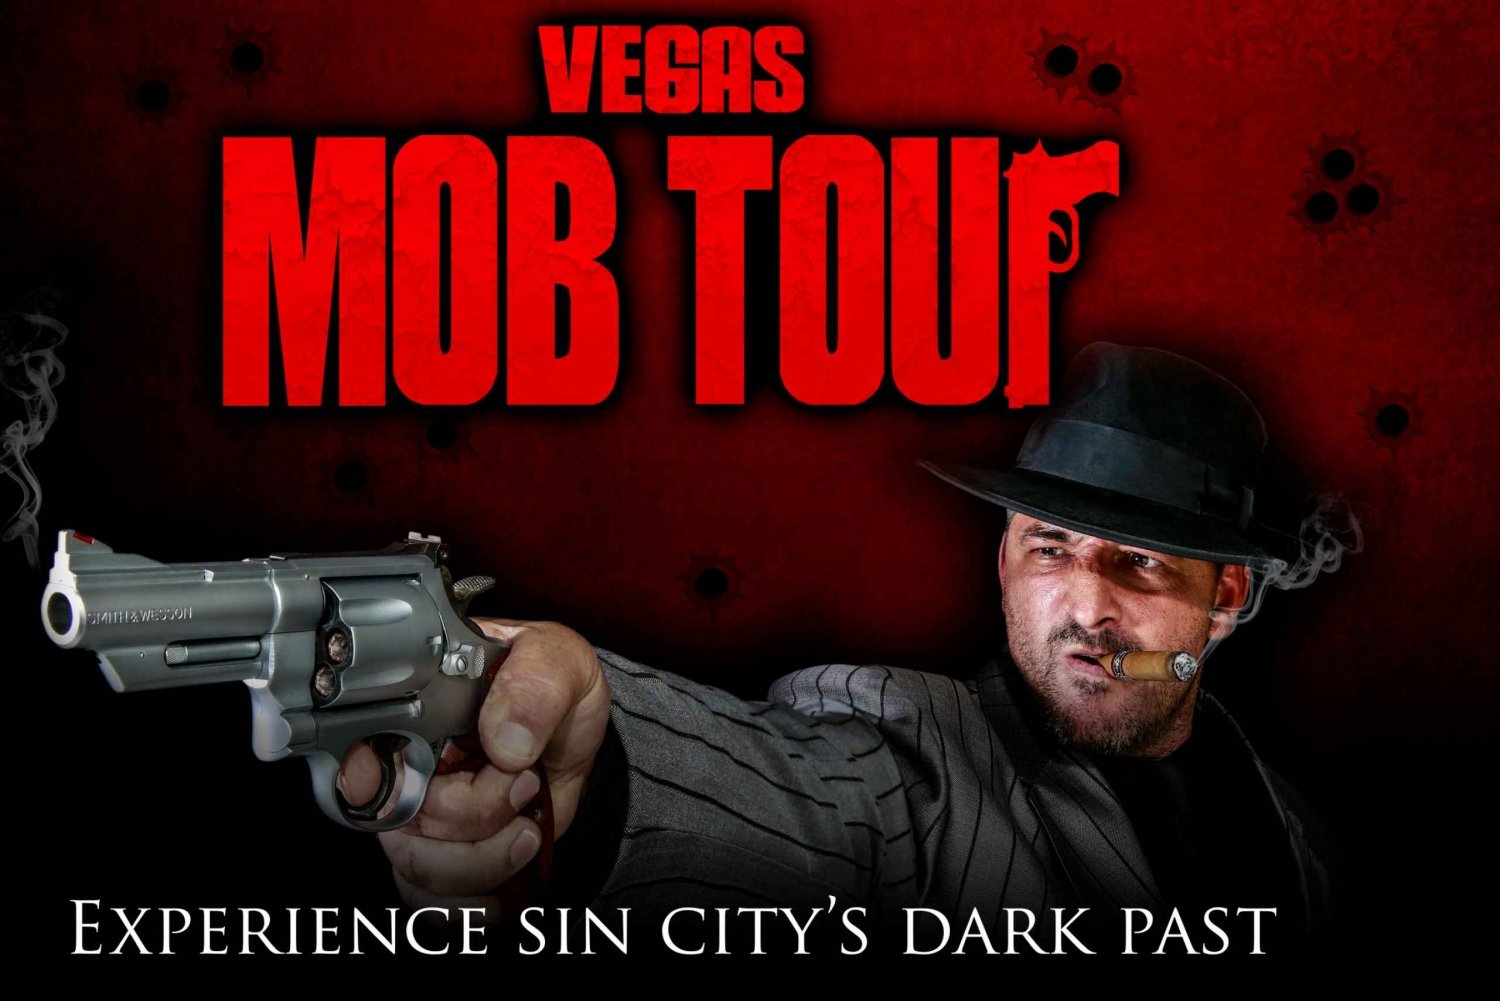 Vegas Mob-tour